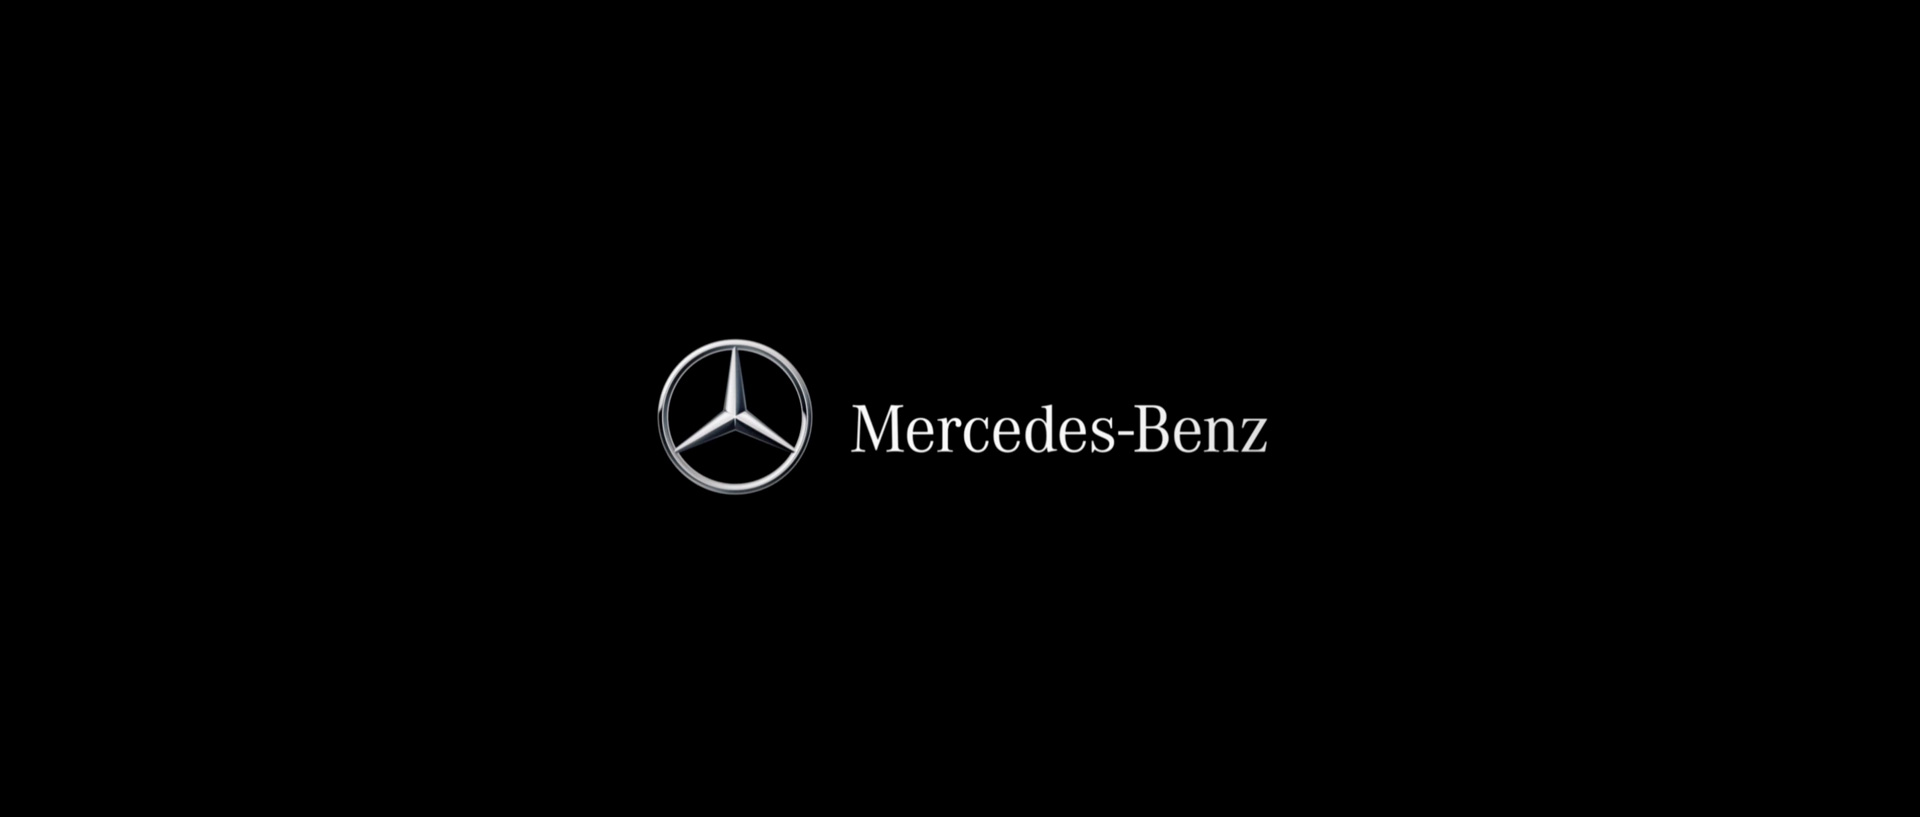 Mercedes Benz Logo Png Poster Jpg